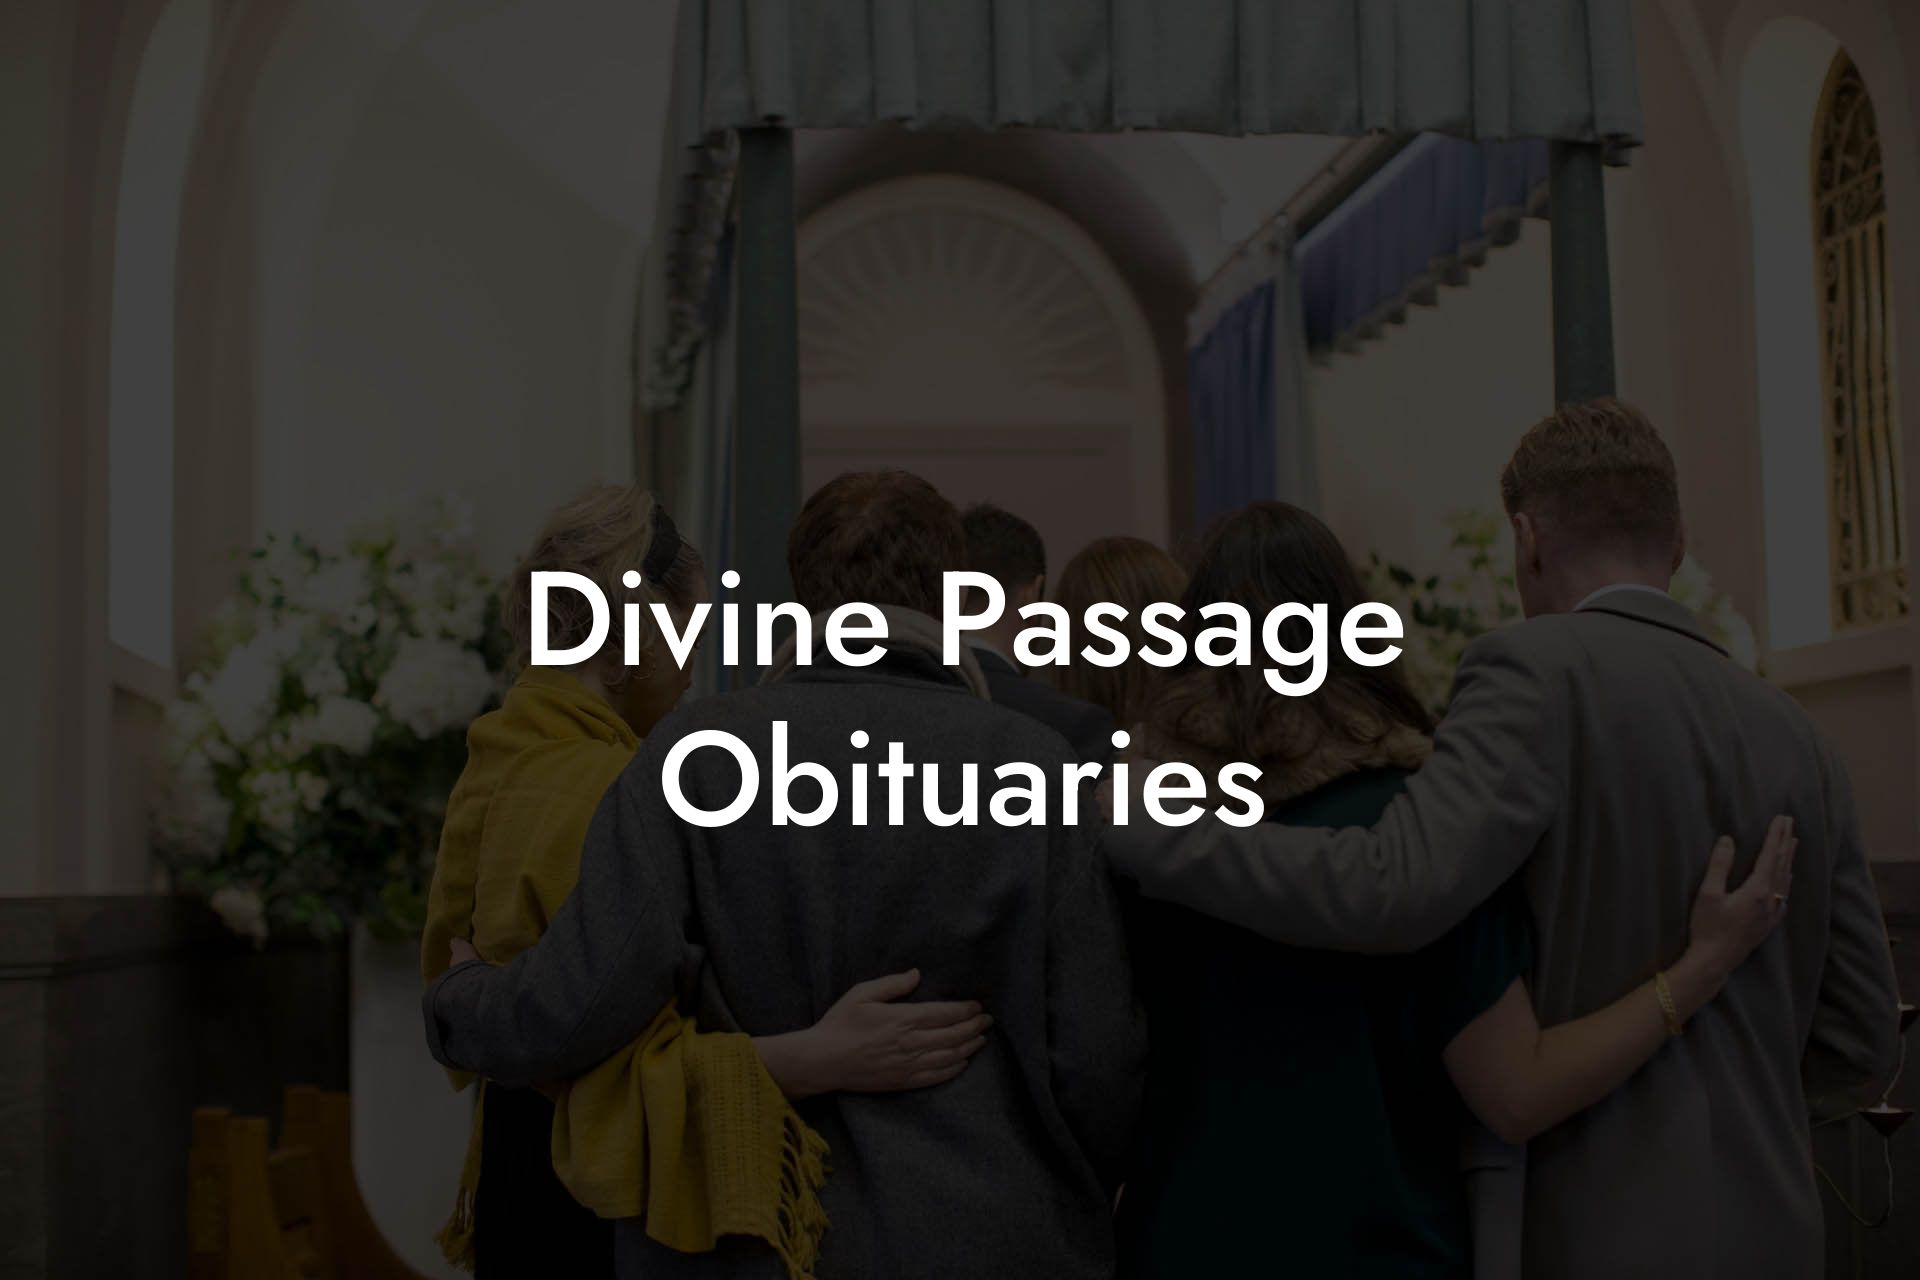 Divine Passage Obituaries